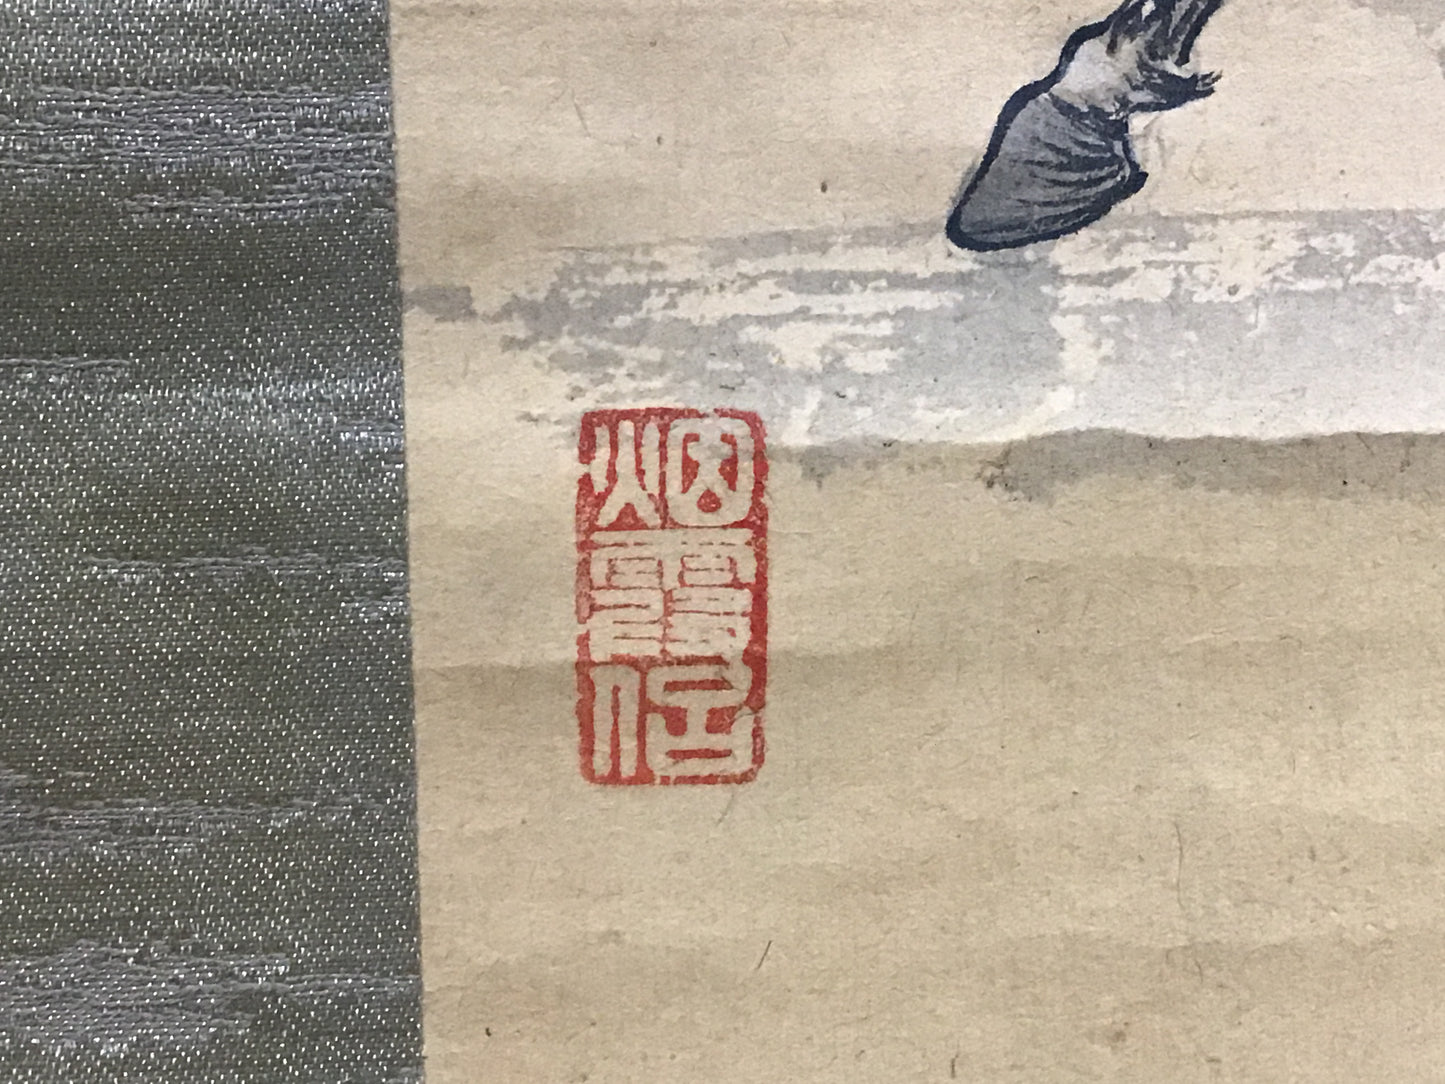 Y2115 KAKEJIKU Musha Samurai signed 114x32cm Japanese hanging scroll interior